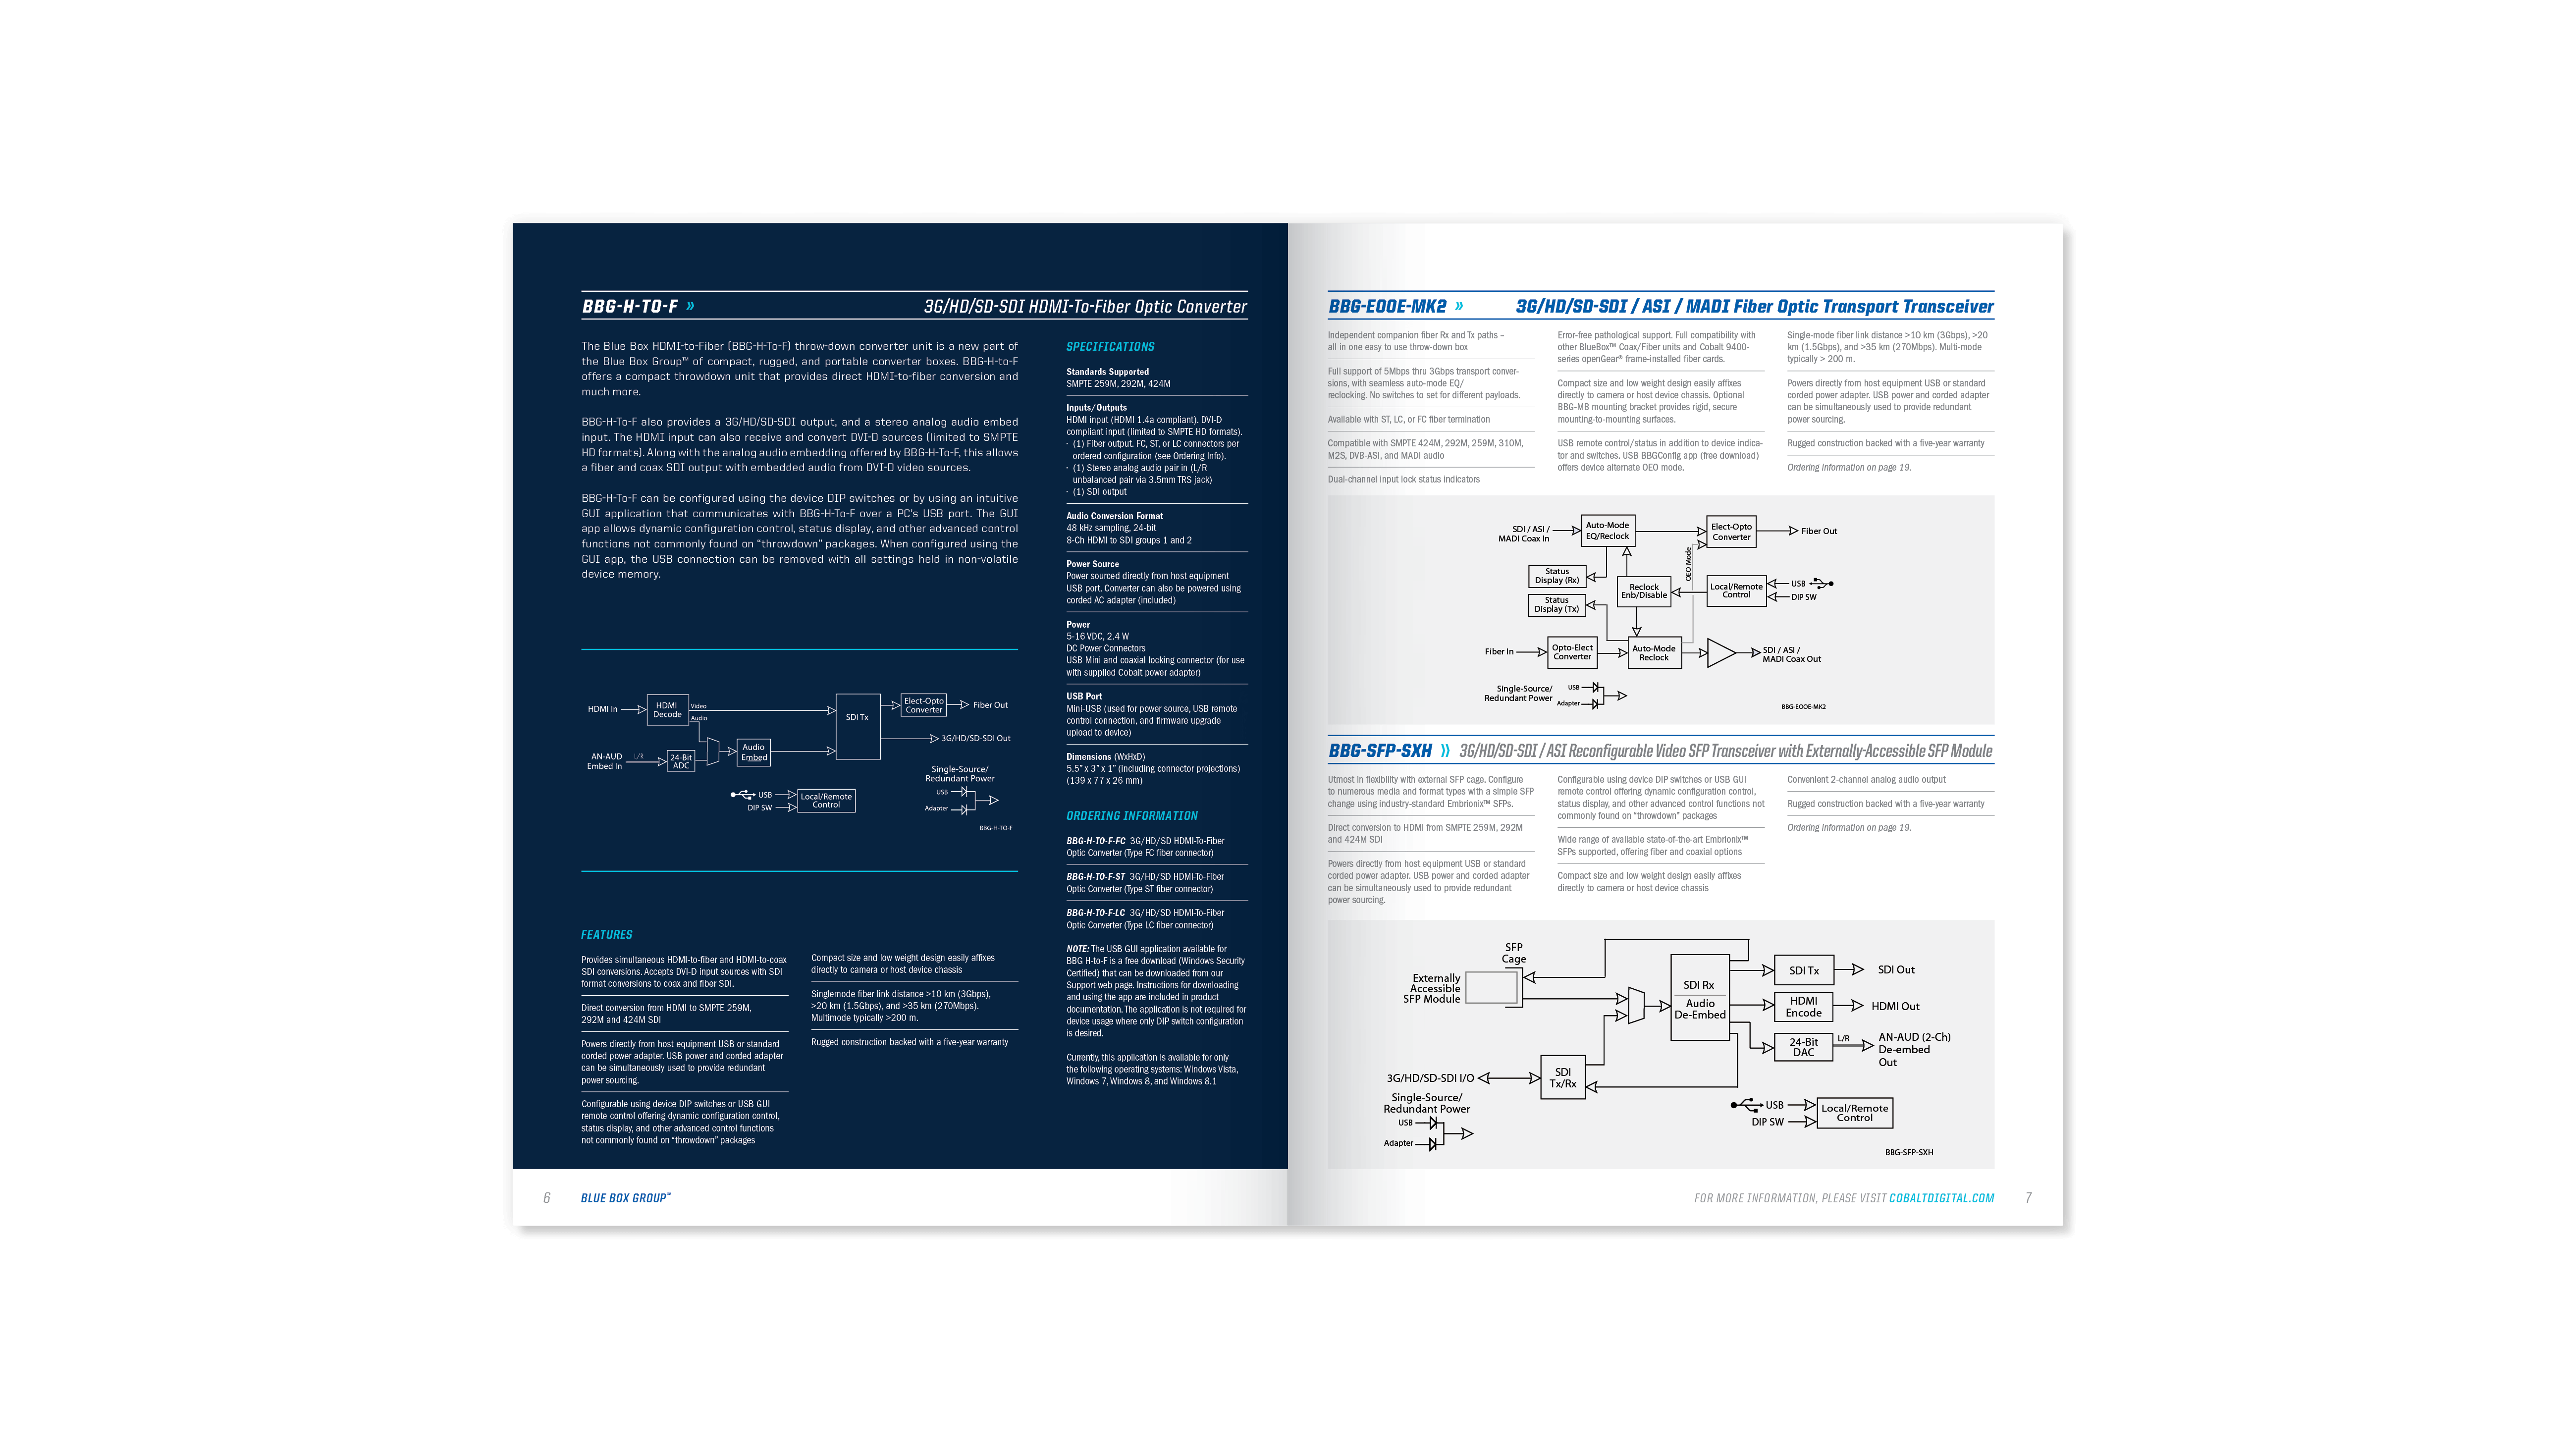 Cobalt Digital | 2020-2021 Blue Box Brochure